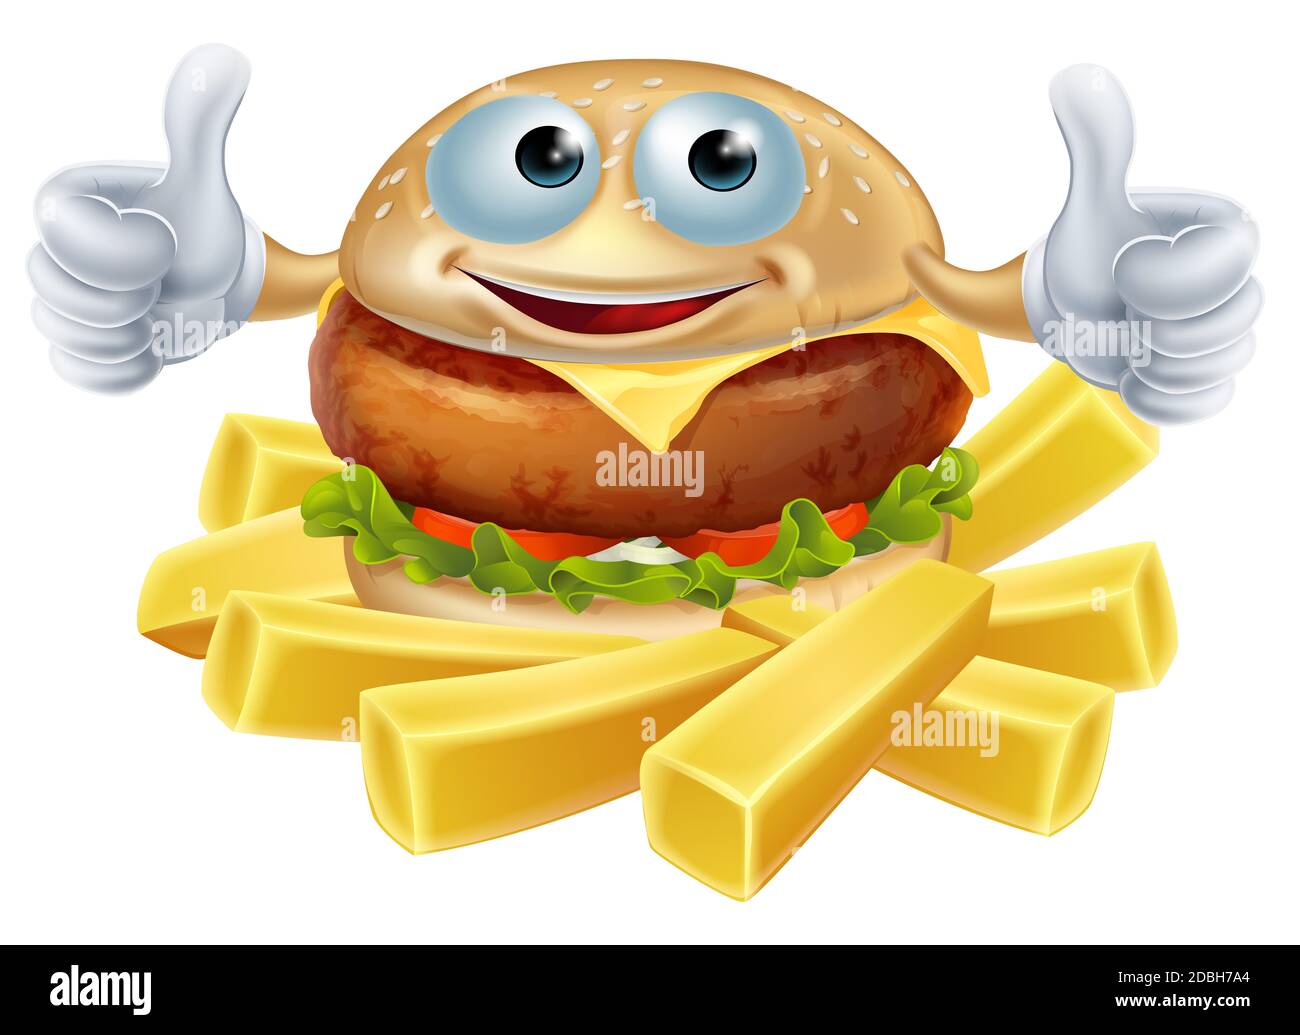 Cartoon hamburger man and chunky potato French fries or chips Stock Photo